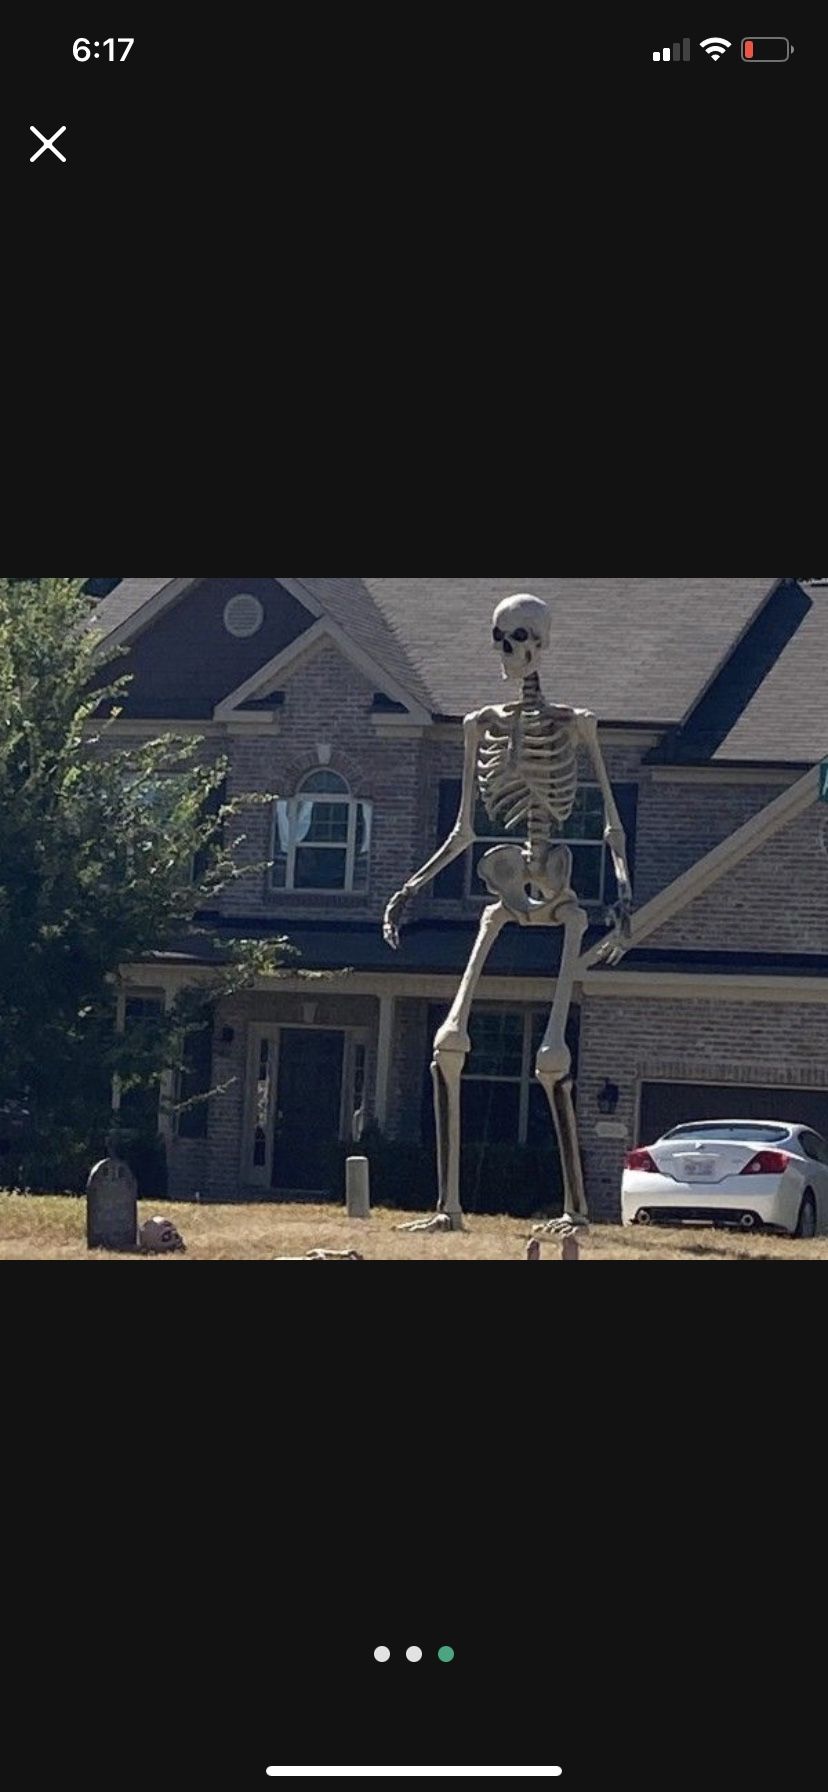 Home Depot Skeleton Halloween Decoration Brand New 